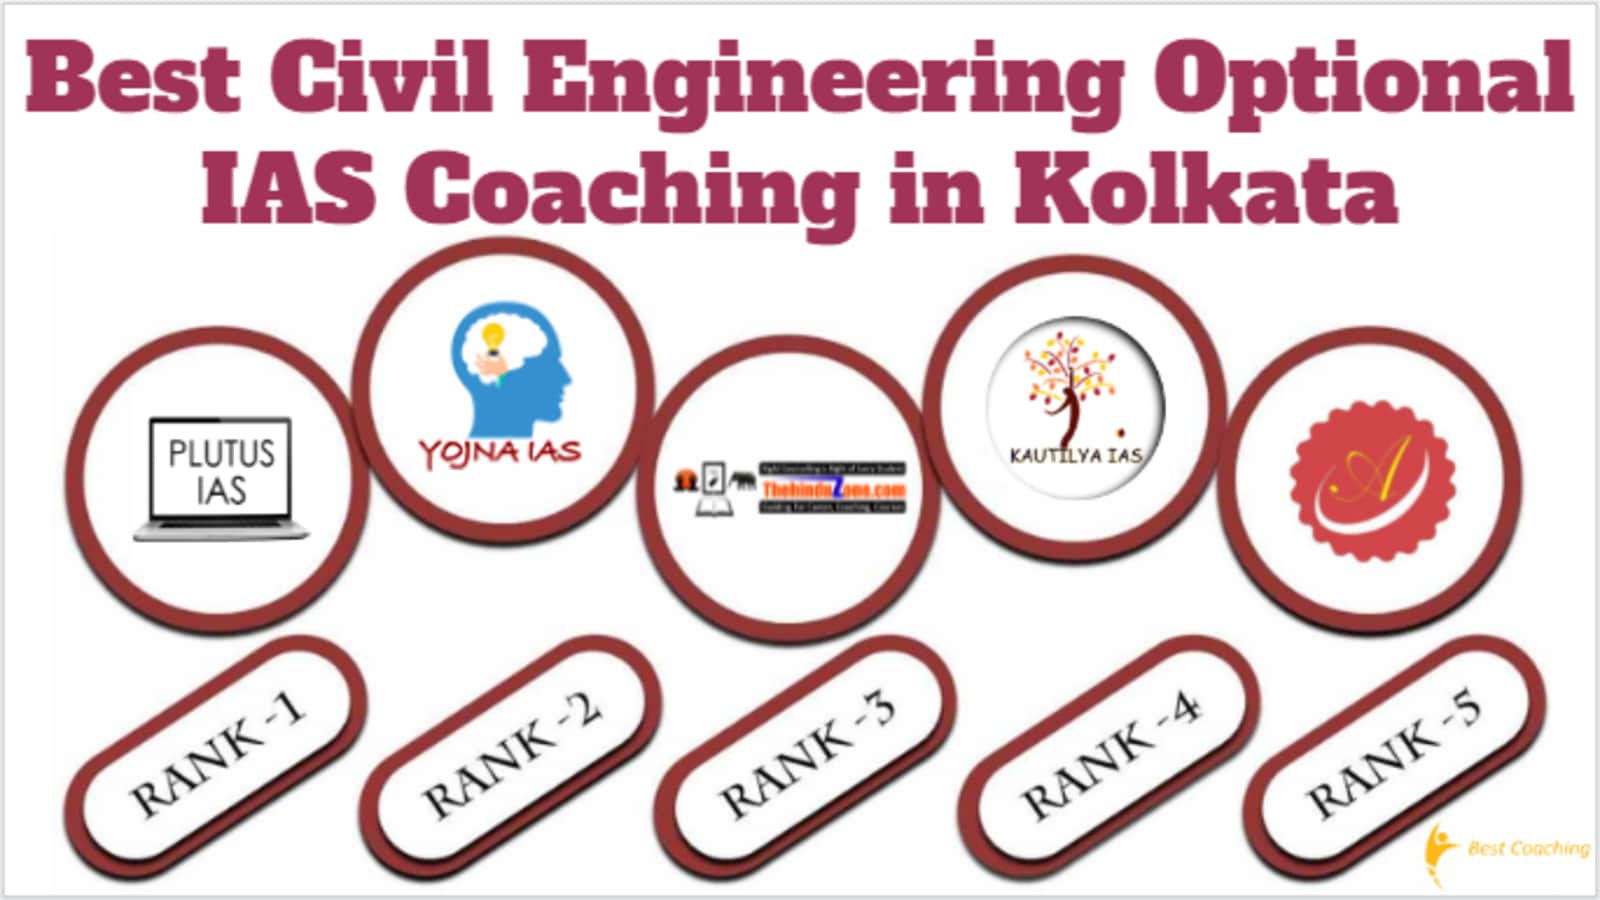 Best Civil Engineering Optional IAS Coaching in Kolkata